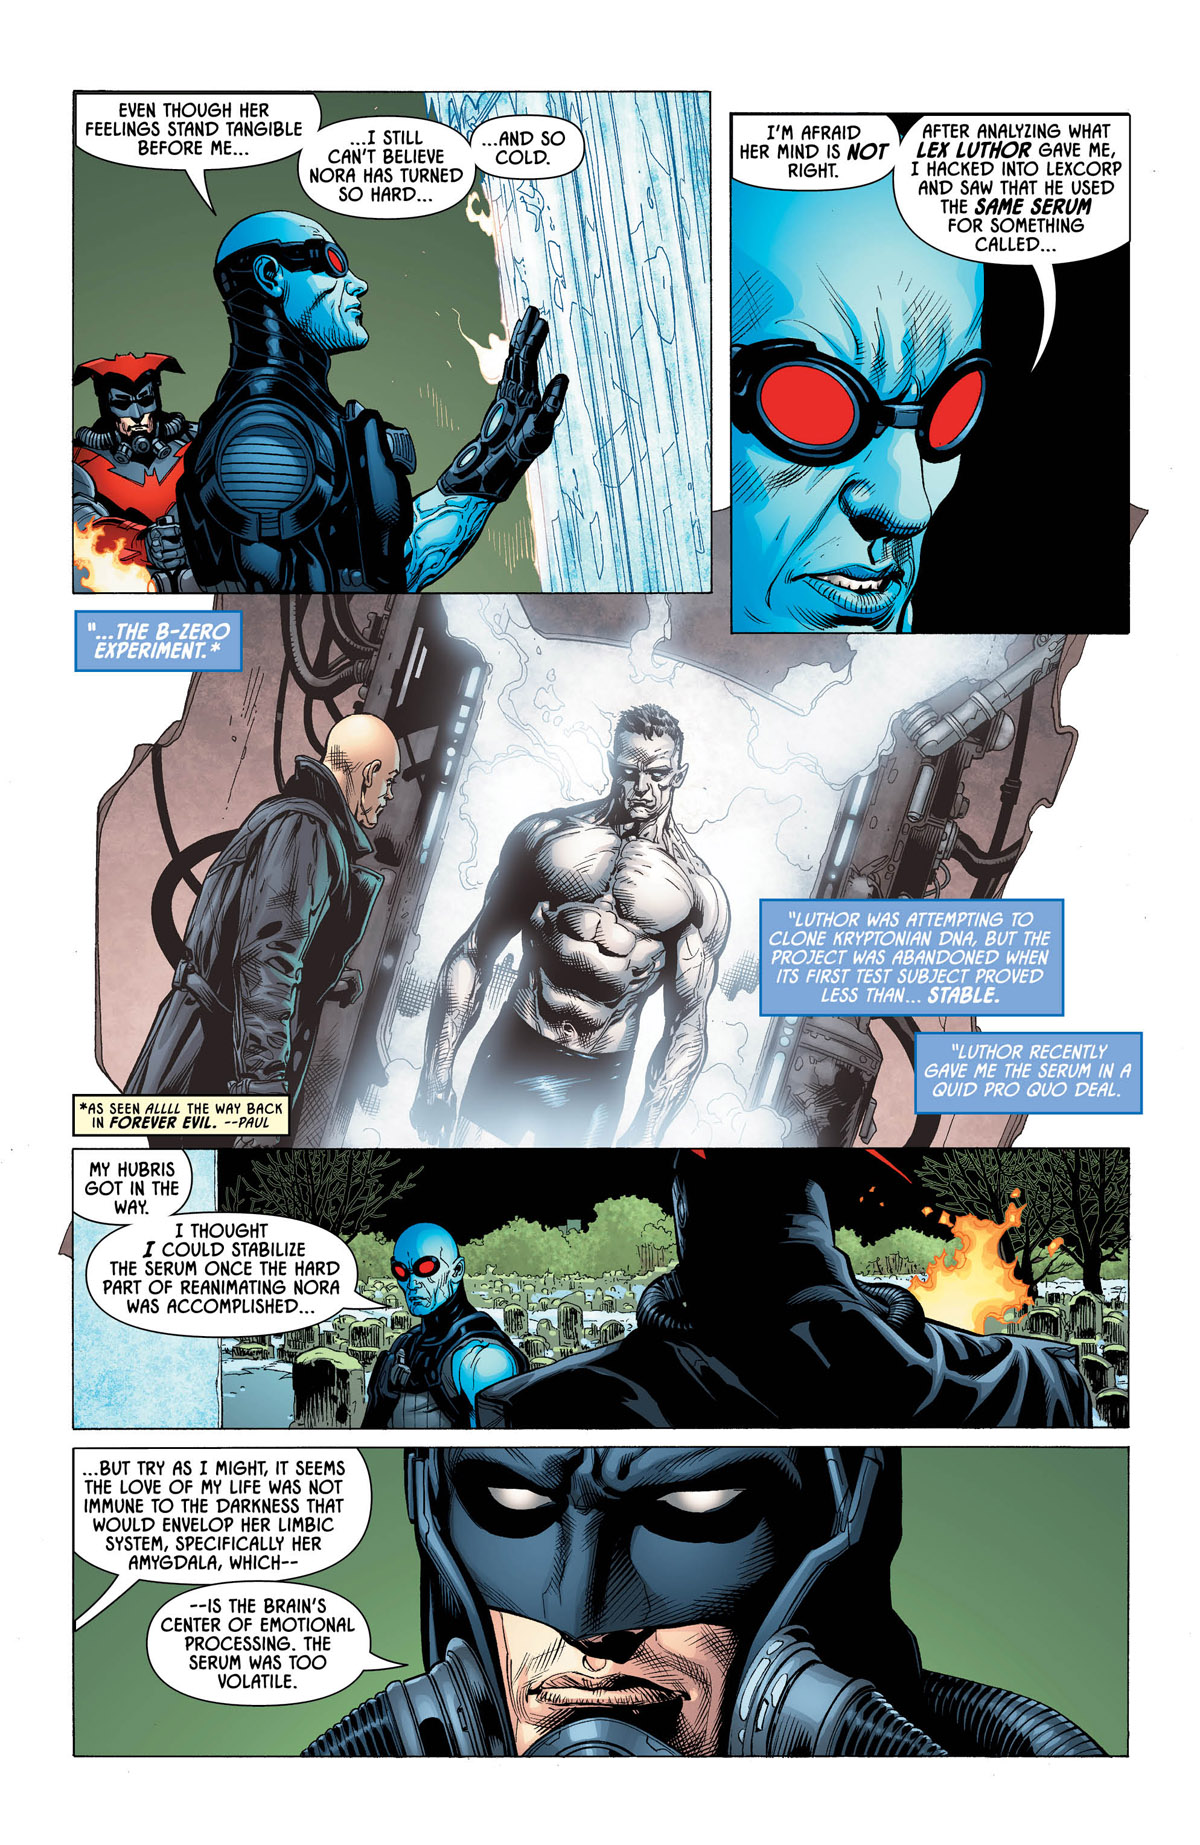 Detective Comics #1016 page 3